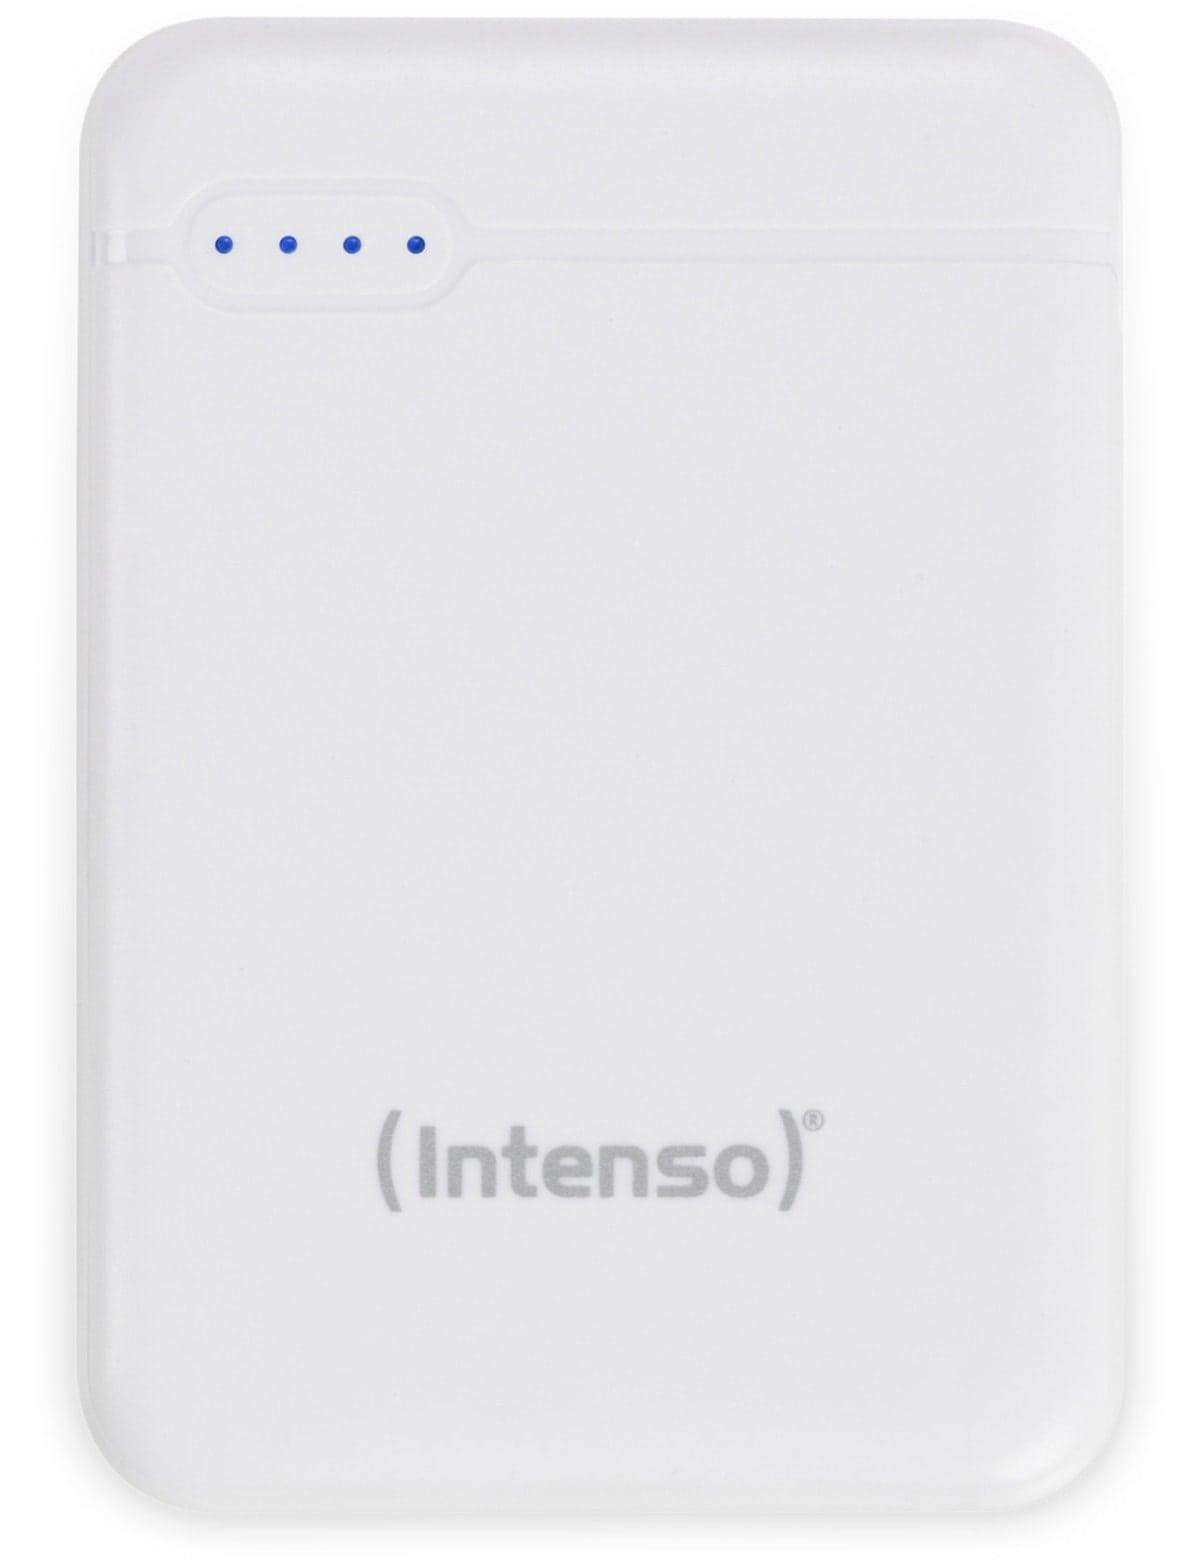 INTENSO USB Powerbank 7313522 XS 5000, 5.000 mAh, weiß von Intenso